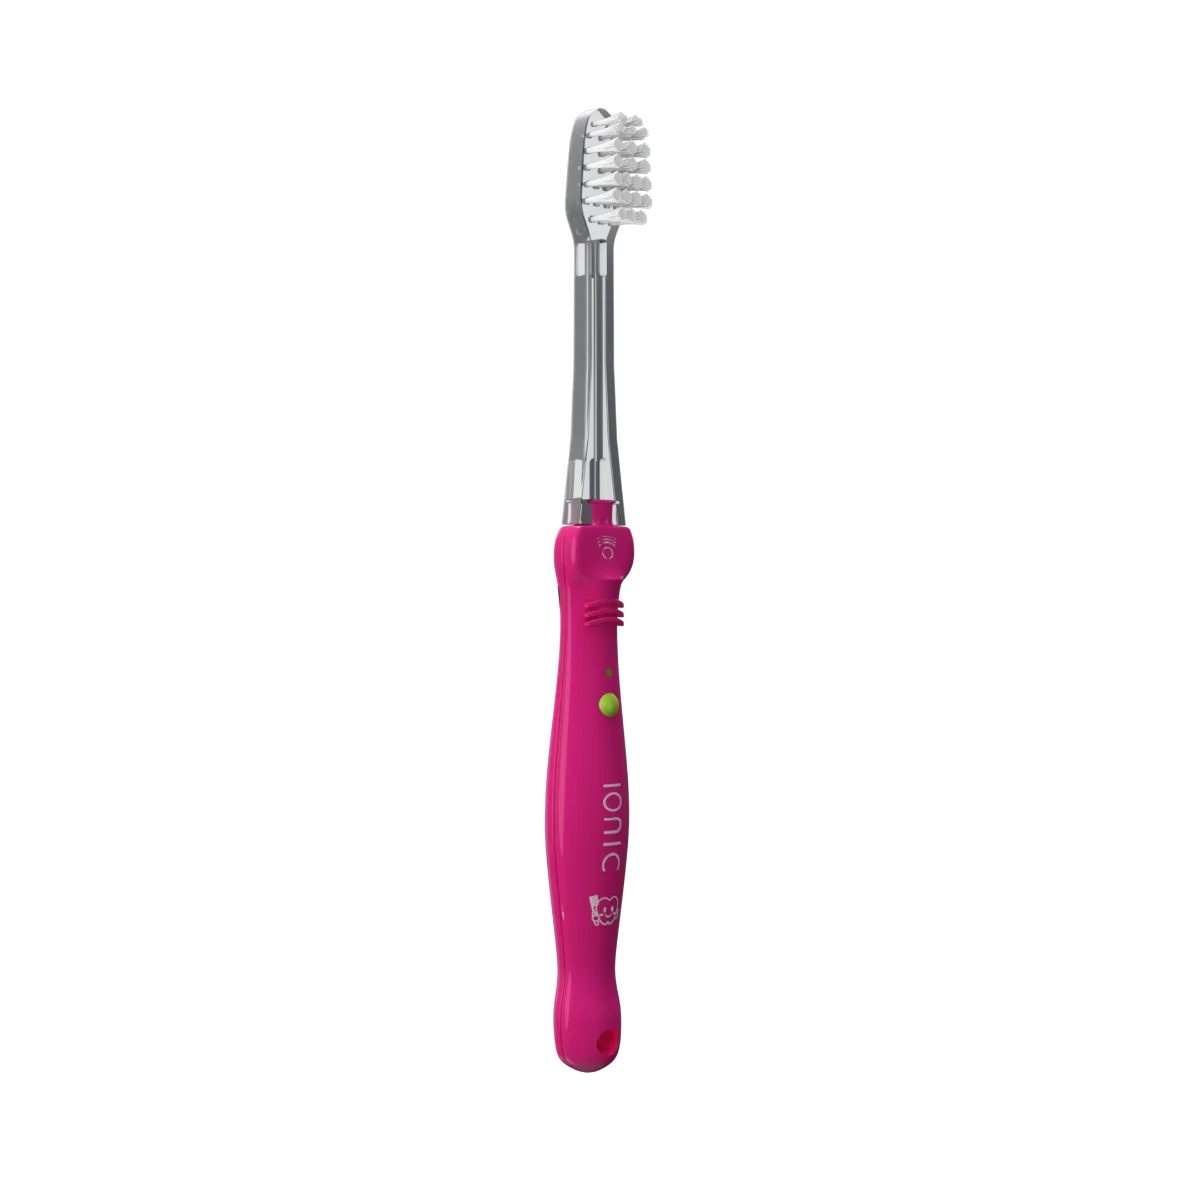 Ionizačná zubná kefka IONICKISS KIDS  detská, ružová 1×1 ks, ionizačná zubná kefka